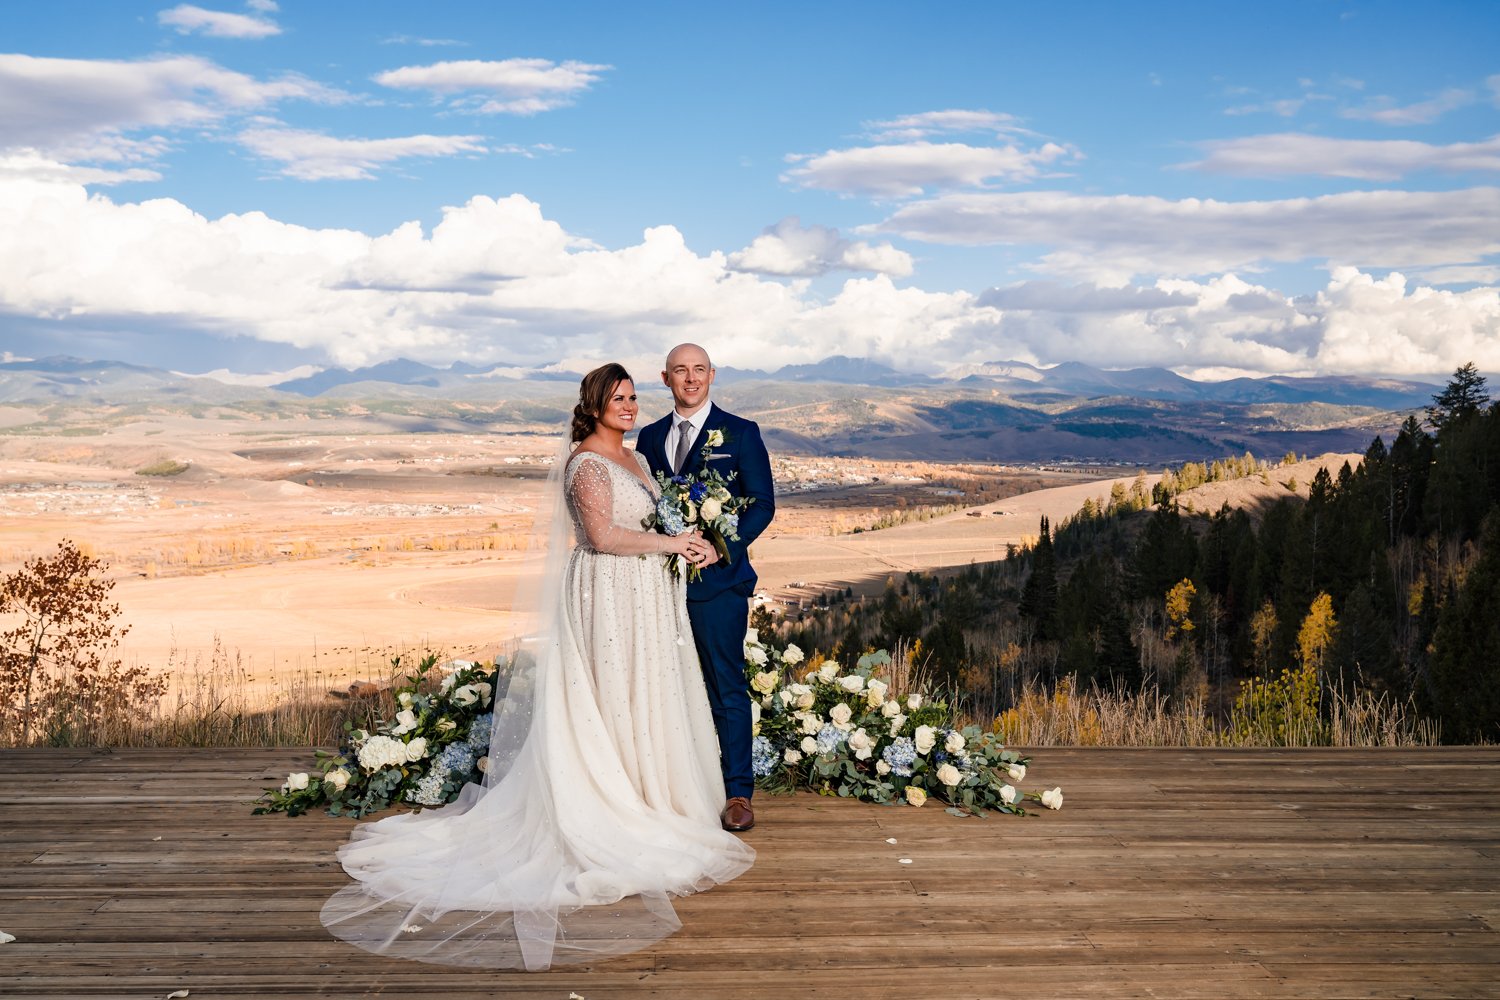 Antler Basin Ranch wedding by Granby photographer, JMGant Photography-115.jpg